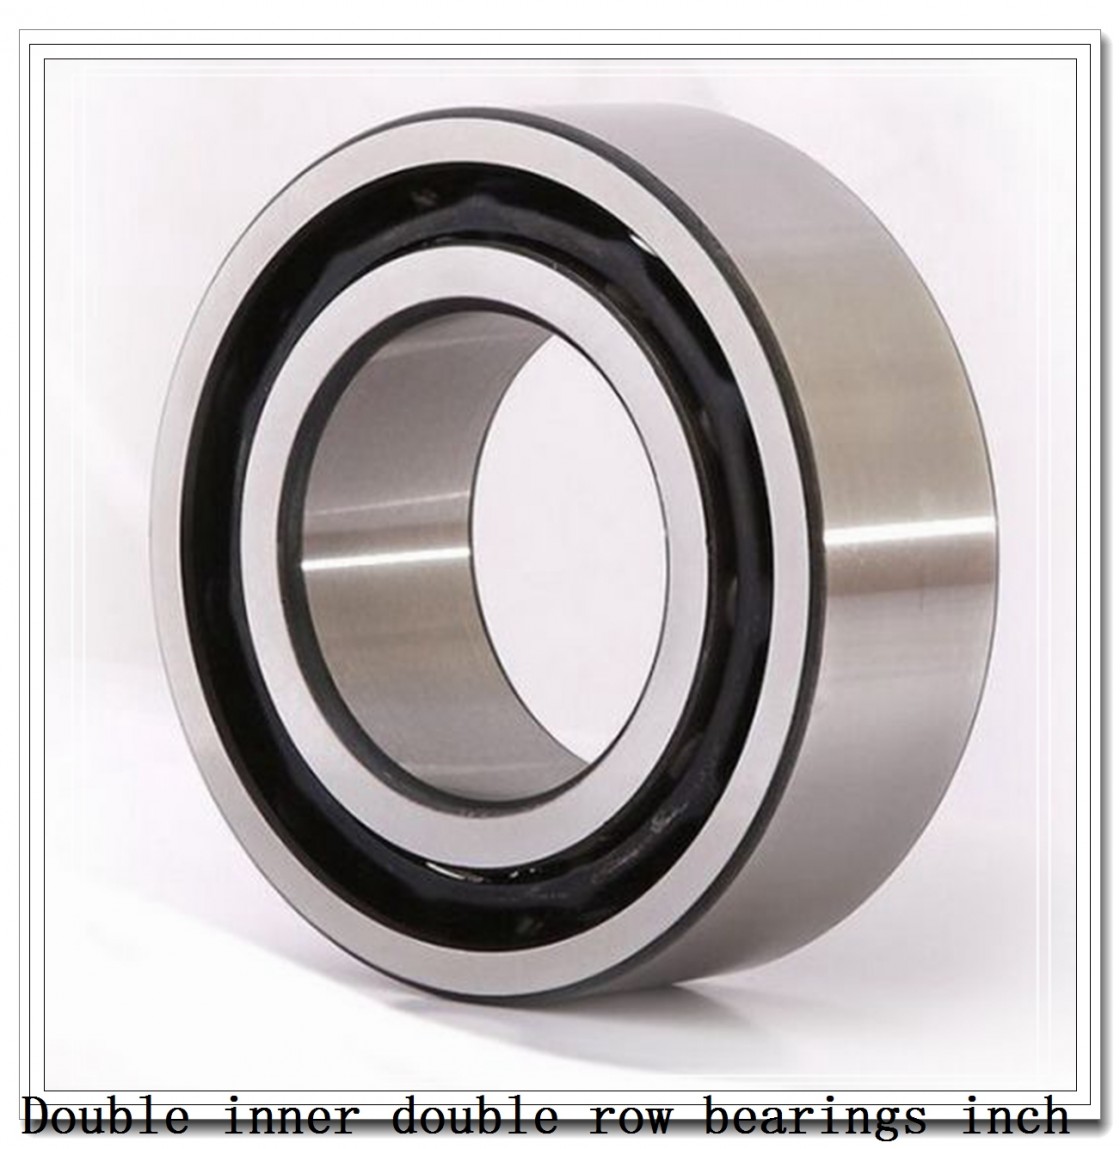 EE221026/221576D Double inner double row bearings inch